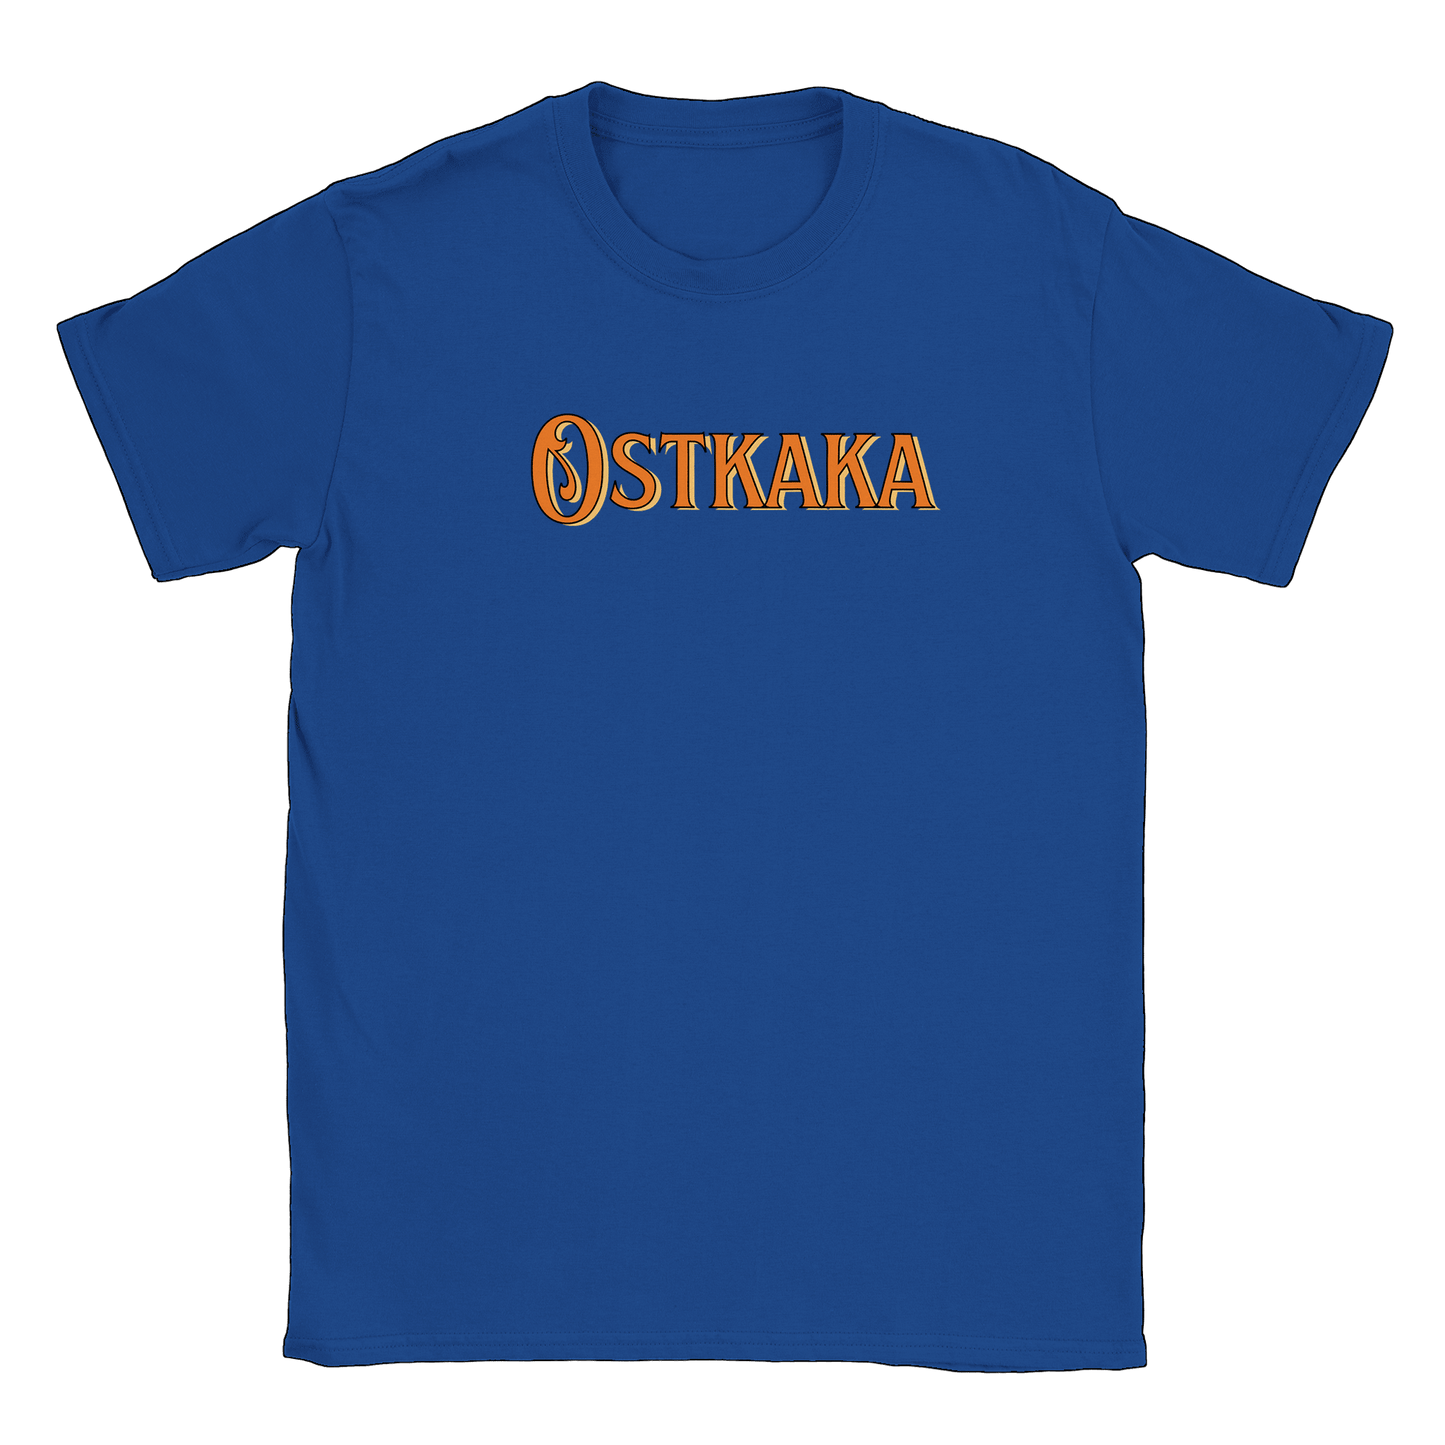 Ostkaka - T-shirt Royal